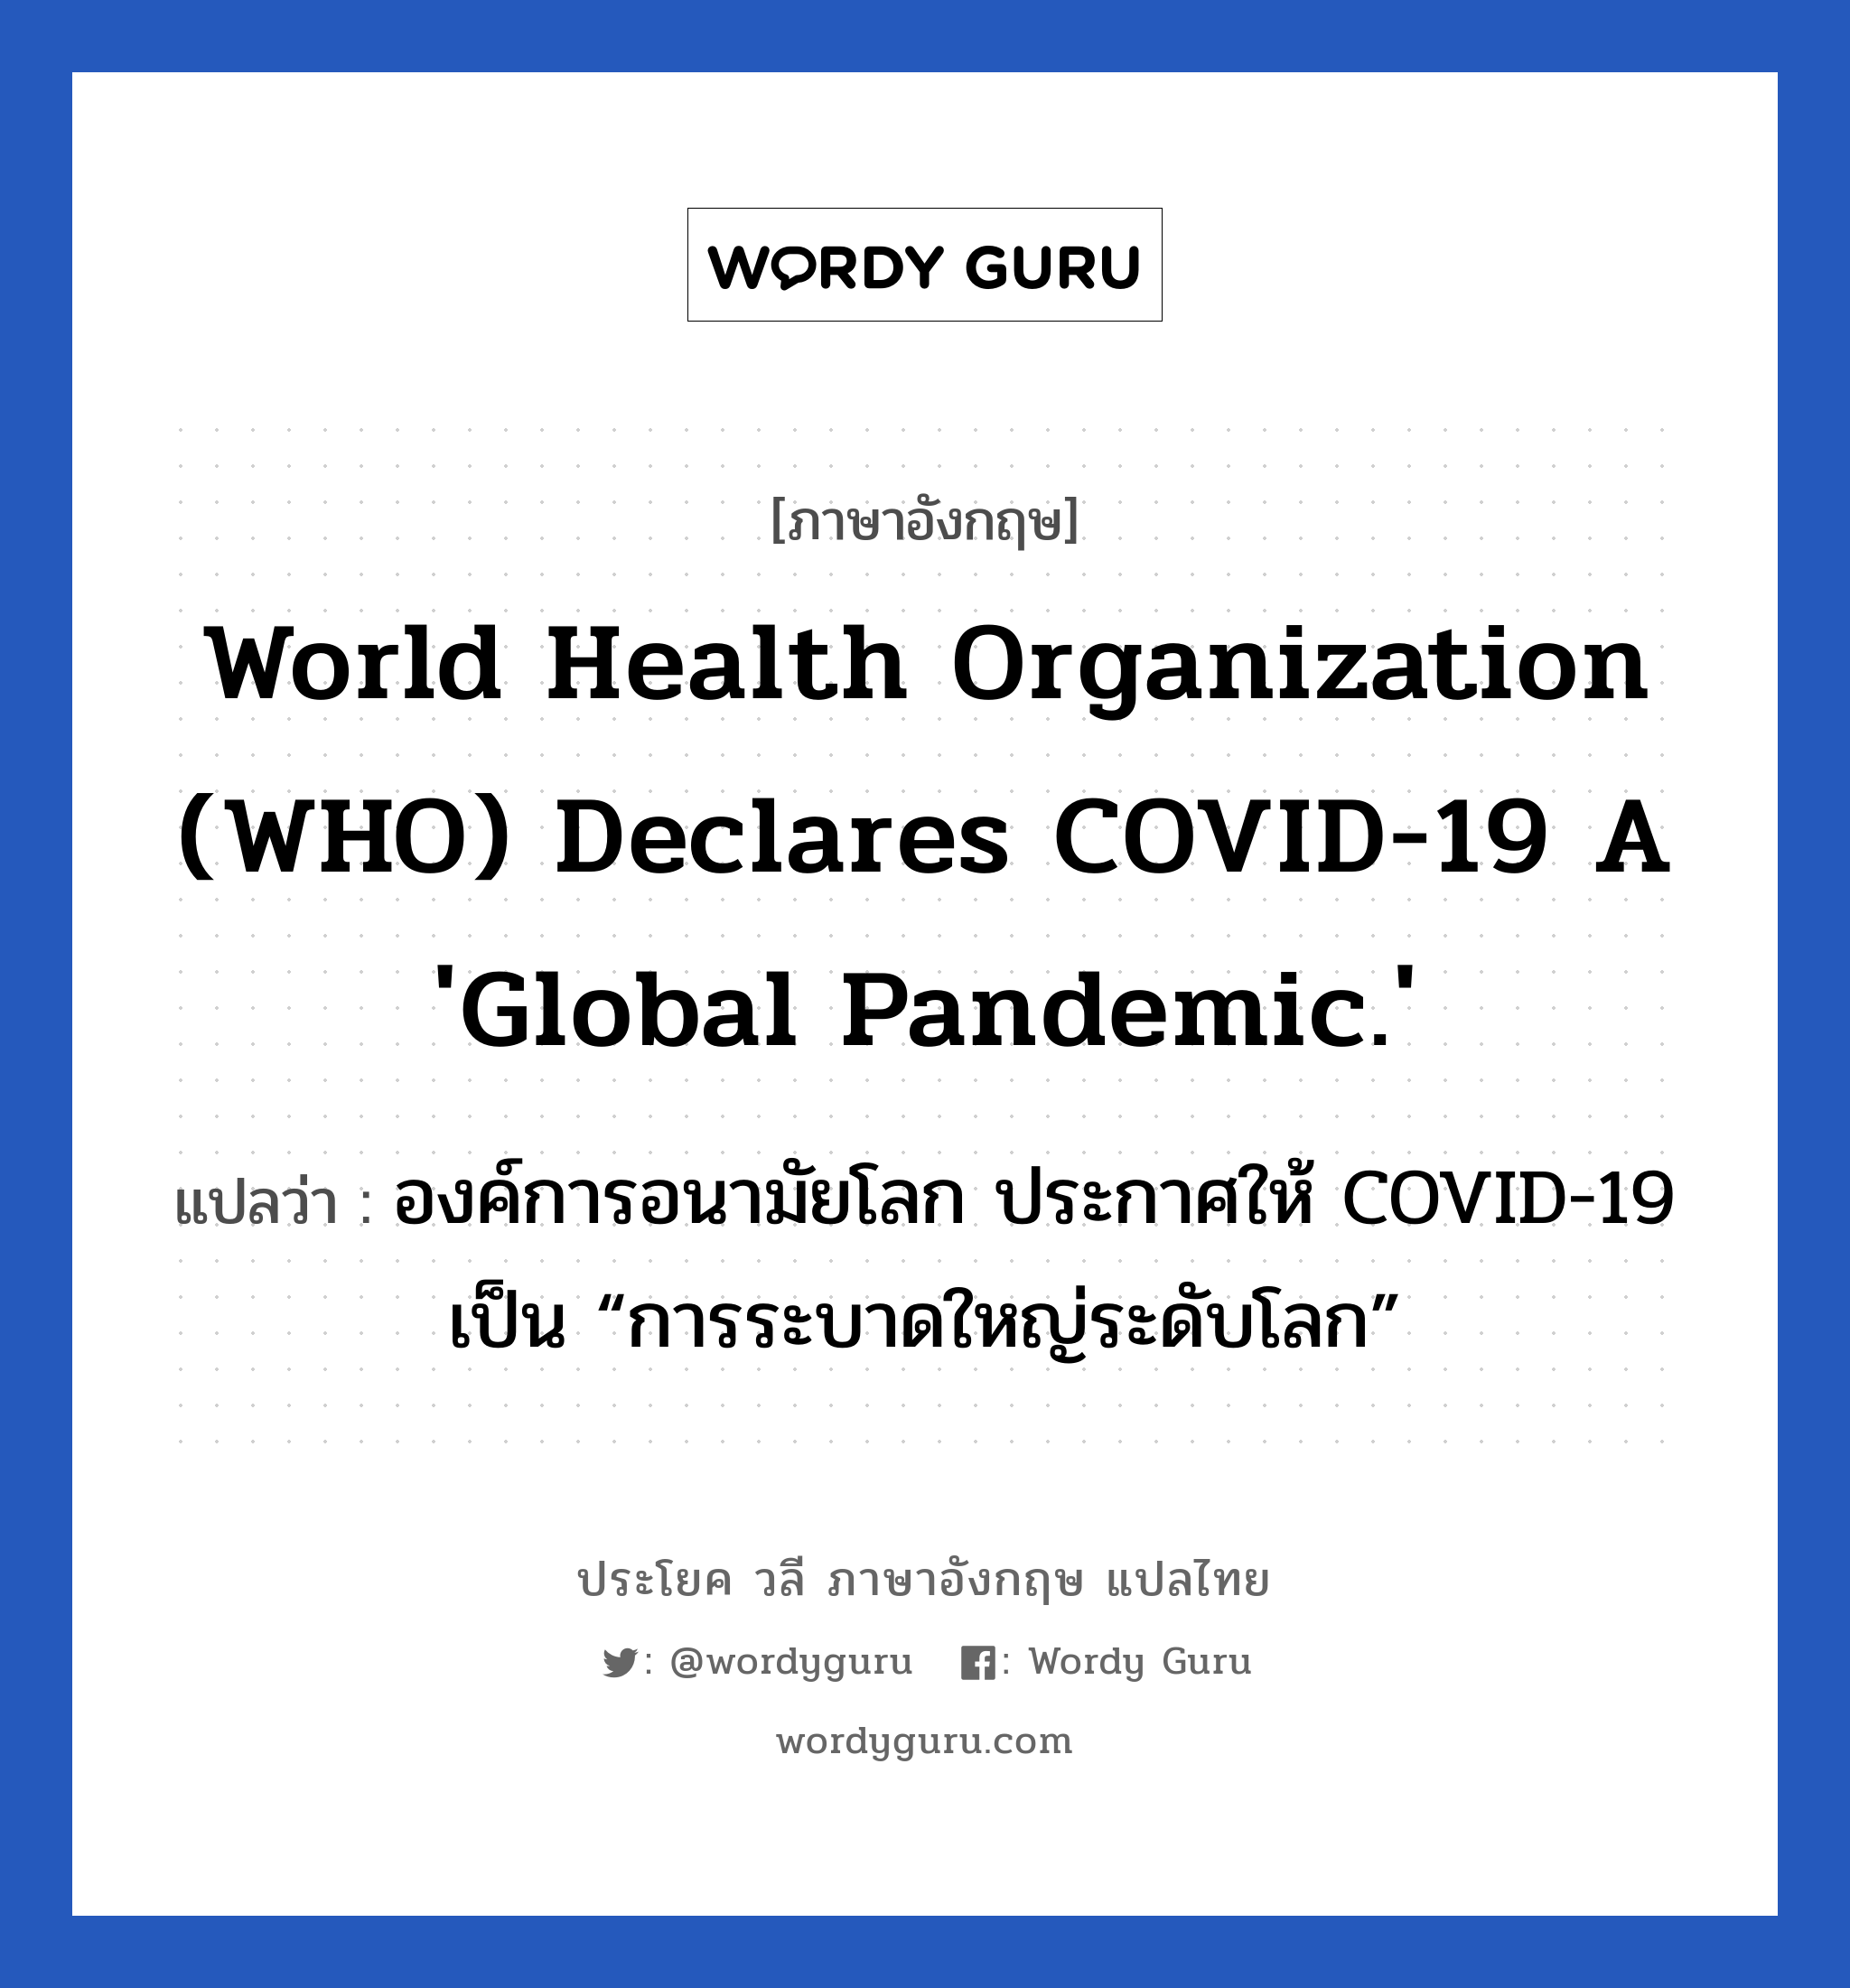 World Health Organization (WHO) Declares COVID-19 a 'Global Pandemic.' แปลว่า?, วลีภาษาอังกฤษ World Health Organization (WHO) Declares COVID-19 a 'Global Pandemic.' แปลว่า องค์การอนามัยโลก ประกาศให้ COVID-19 เป็น “การระบาดใหญ่ระดับโลก”